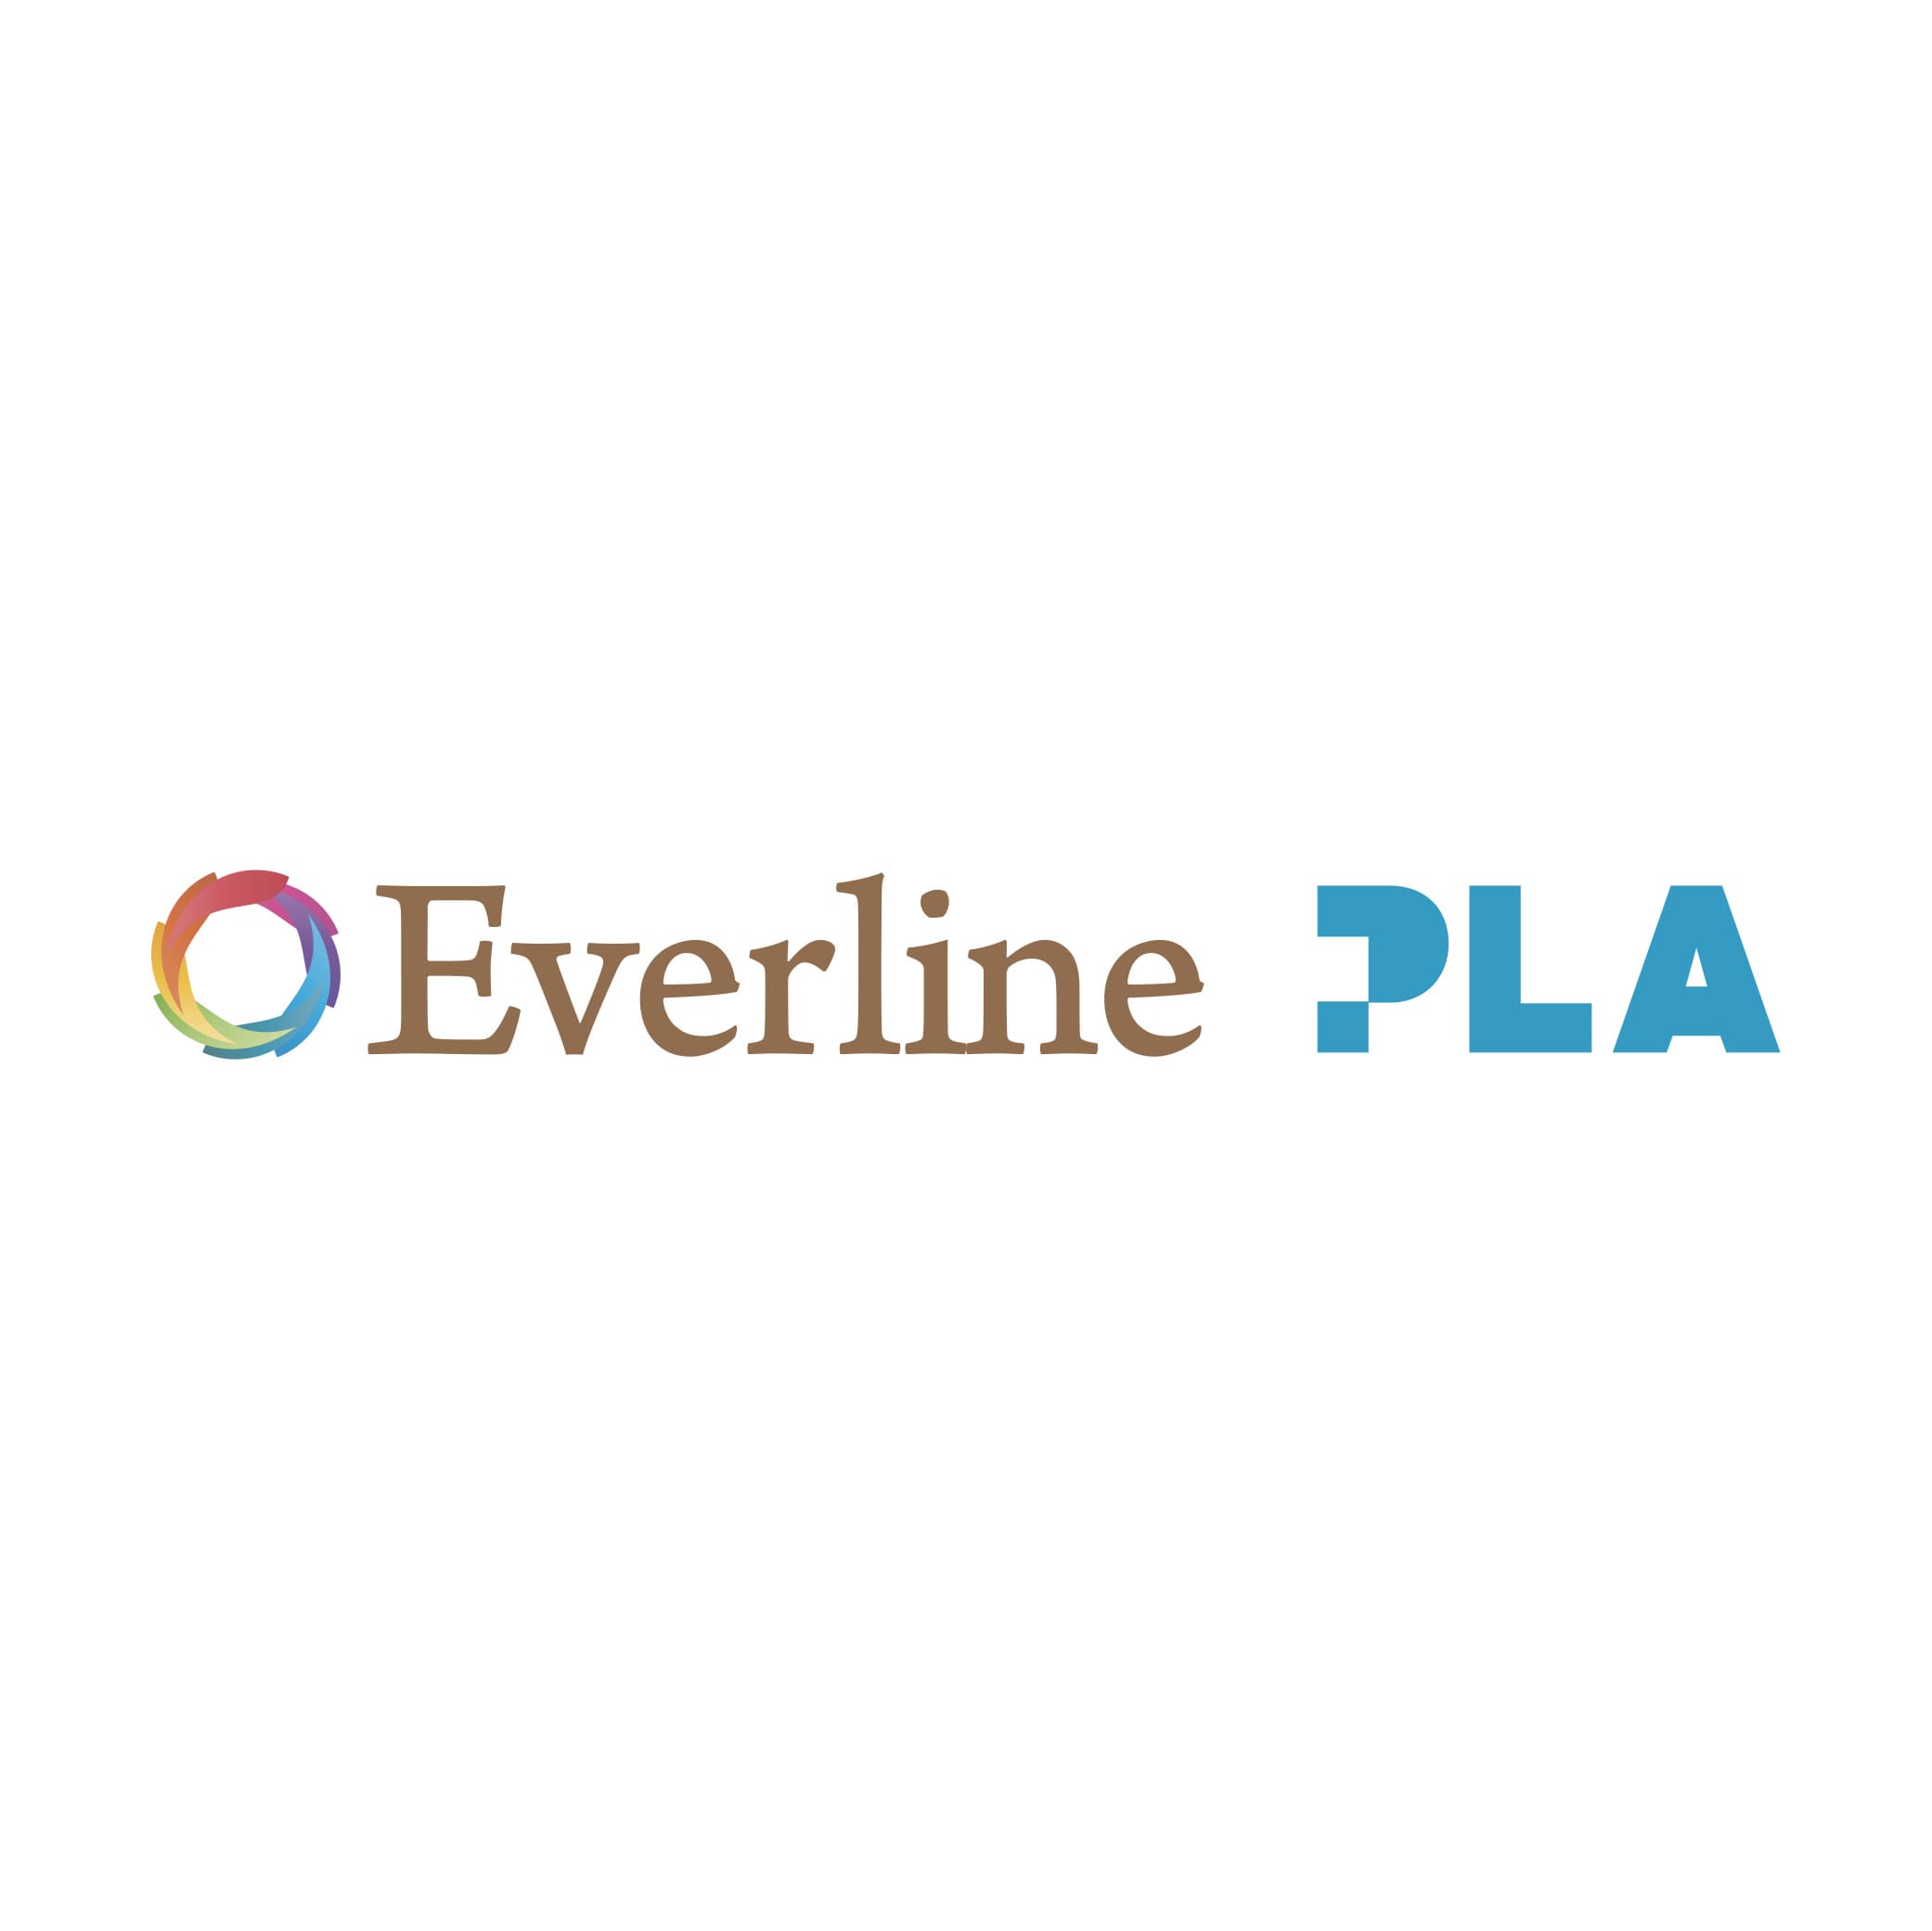 Thread Lift_ Everline PLA